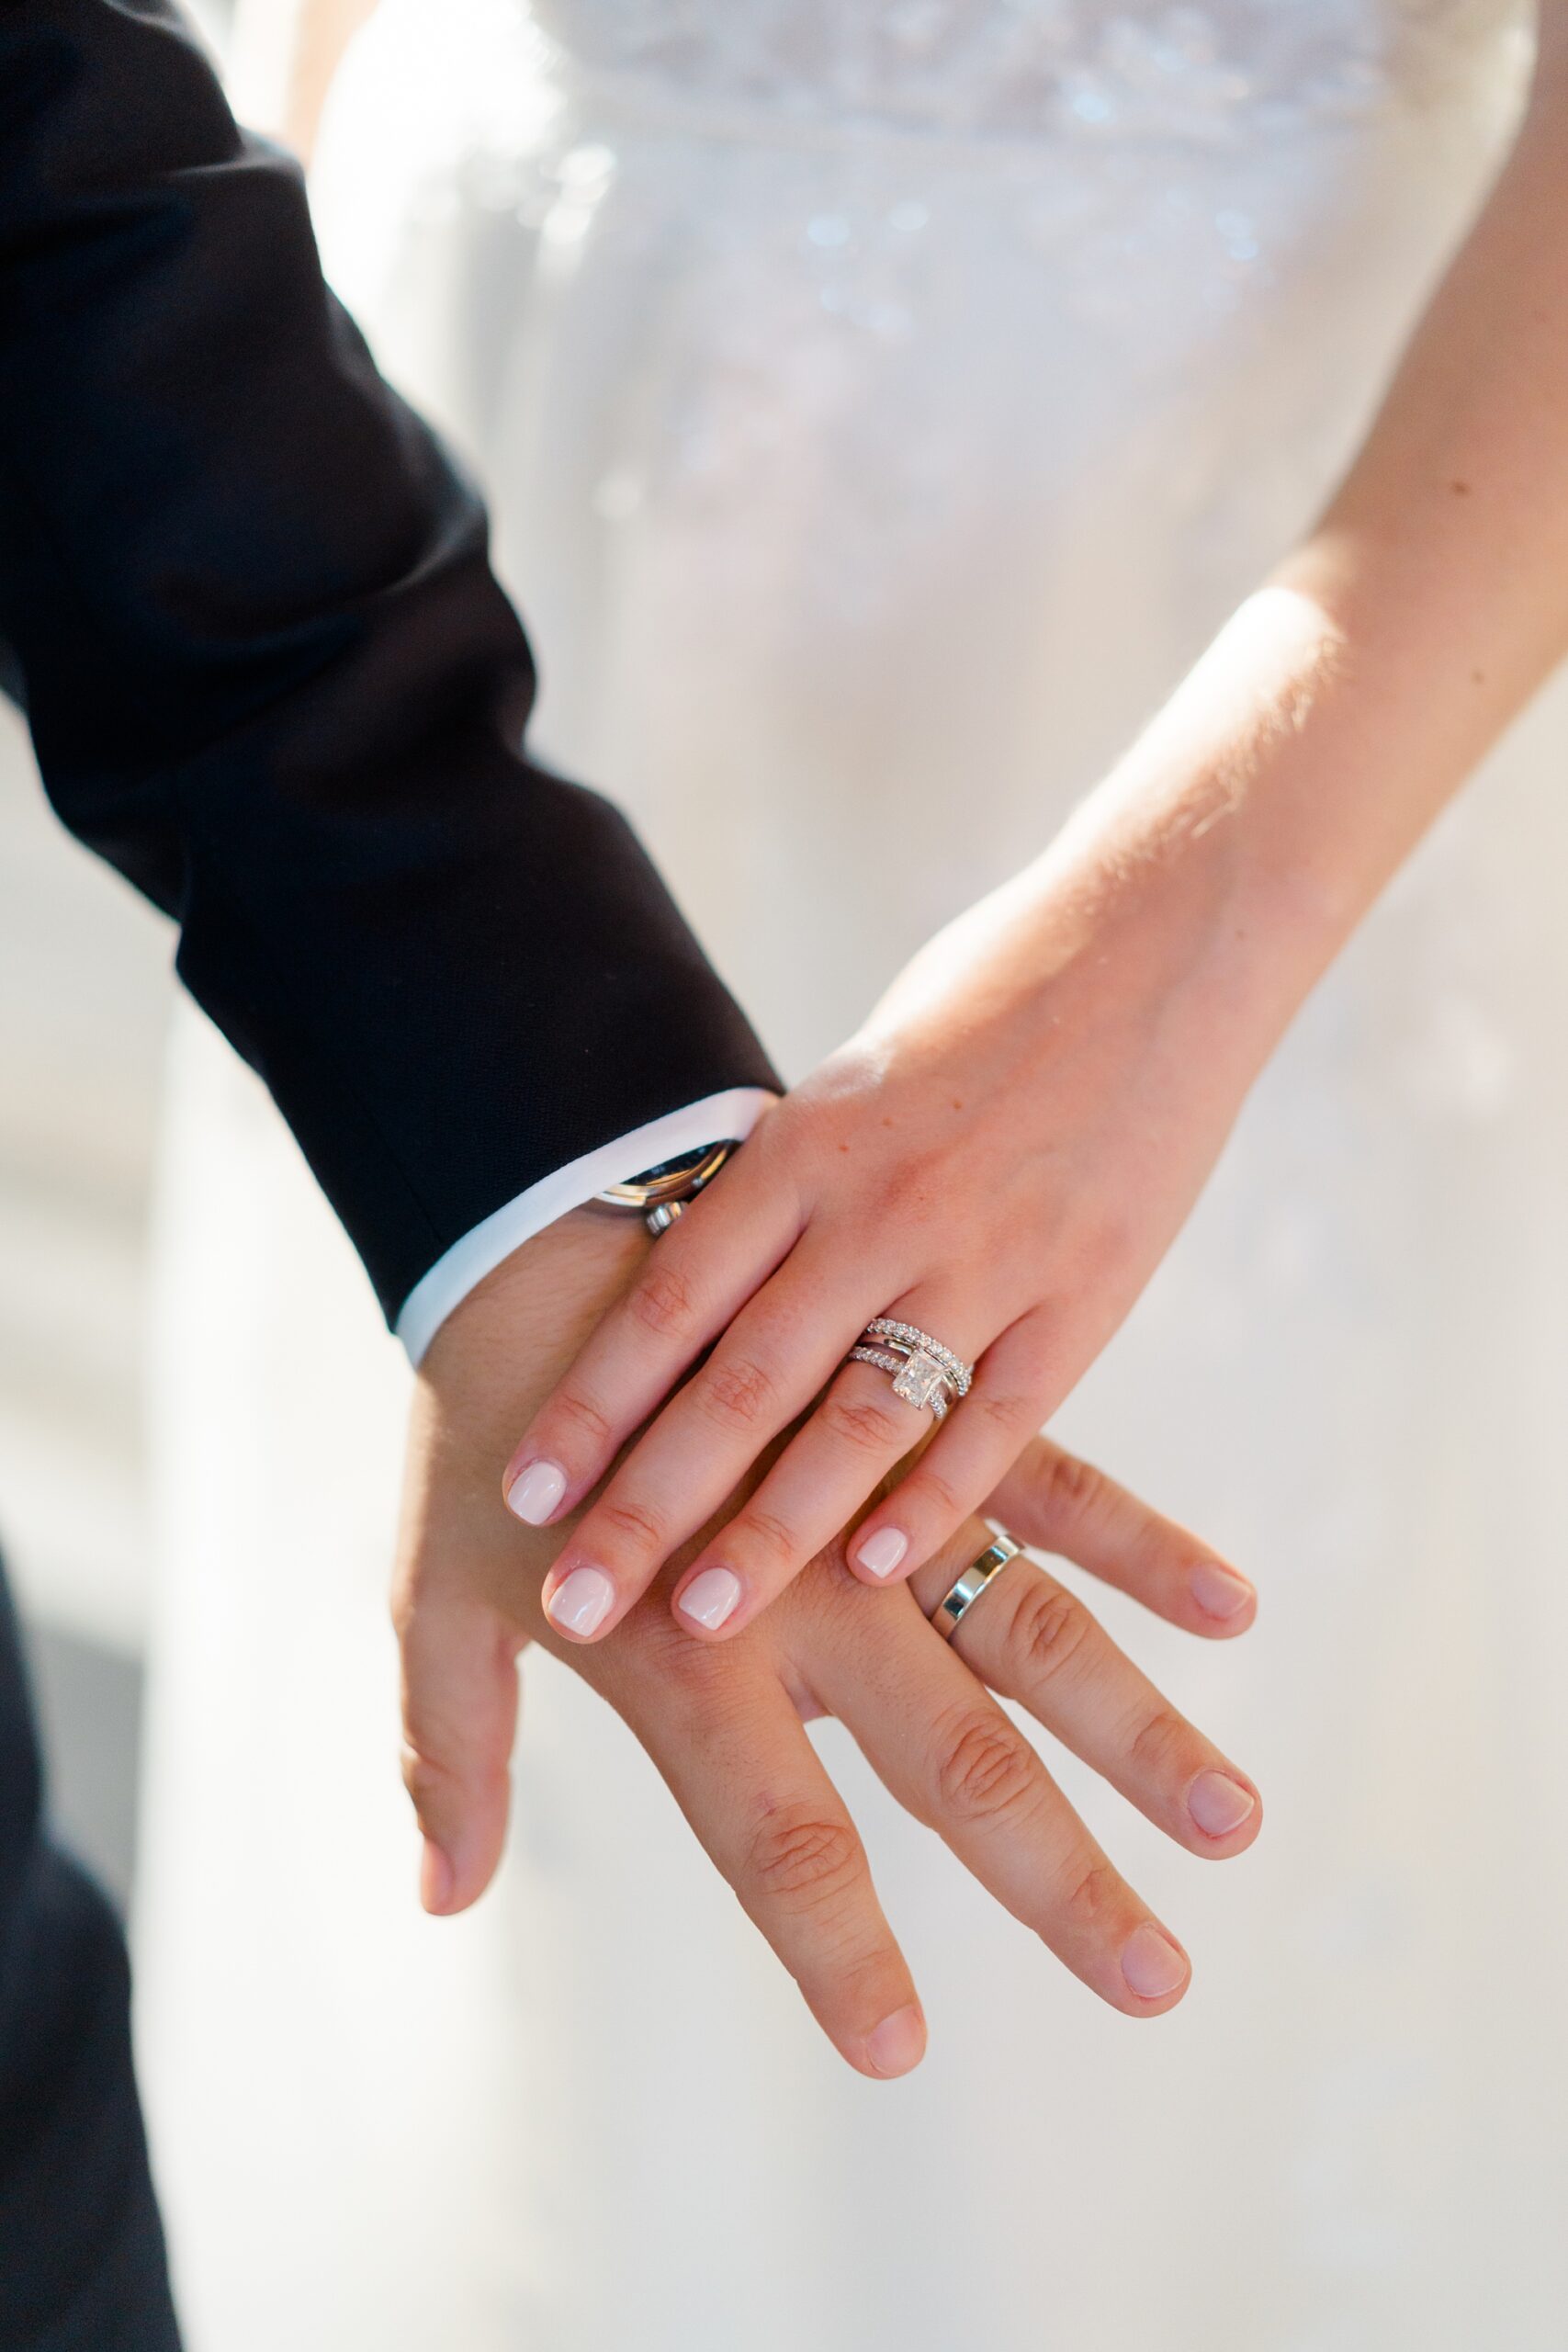 newlyweds show off wedding rings